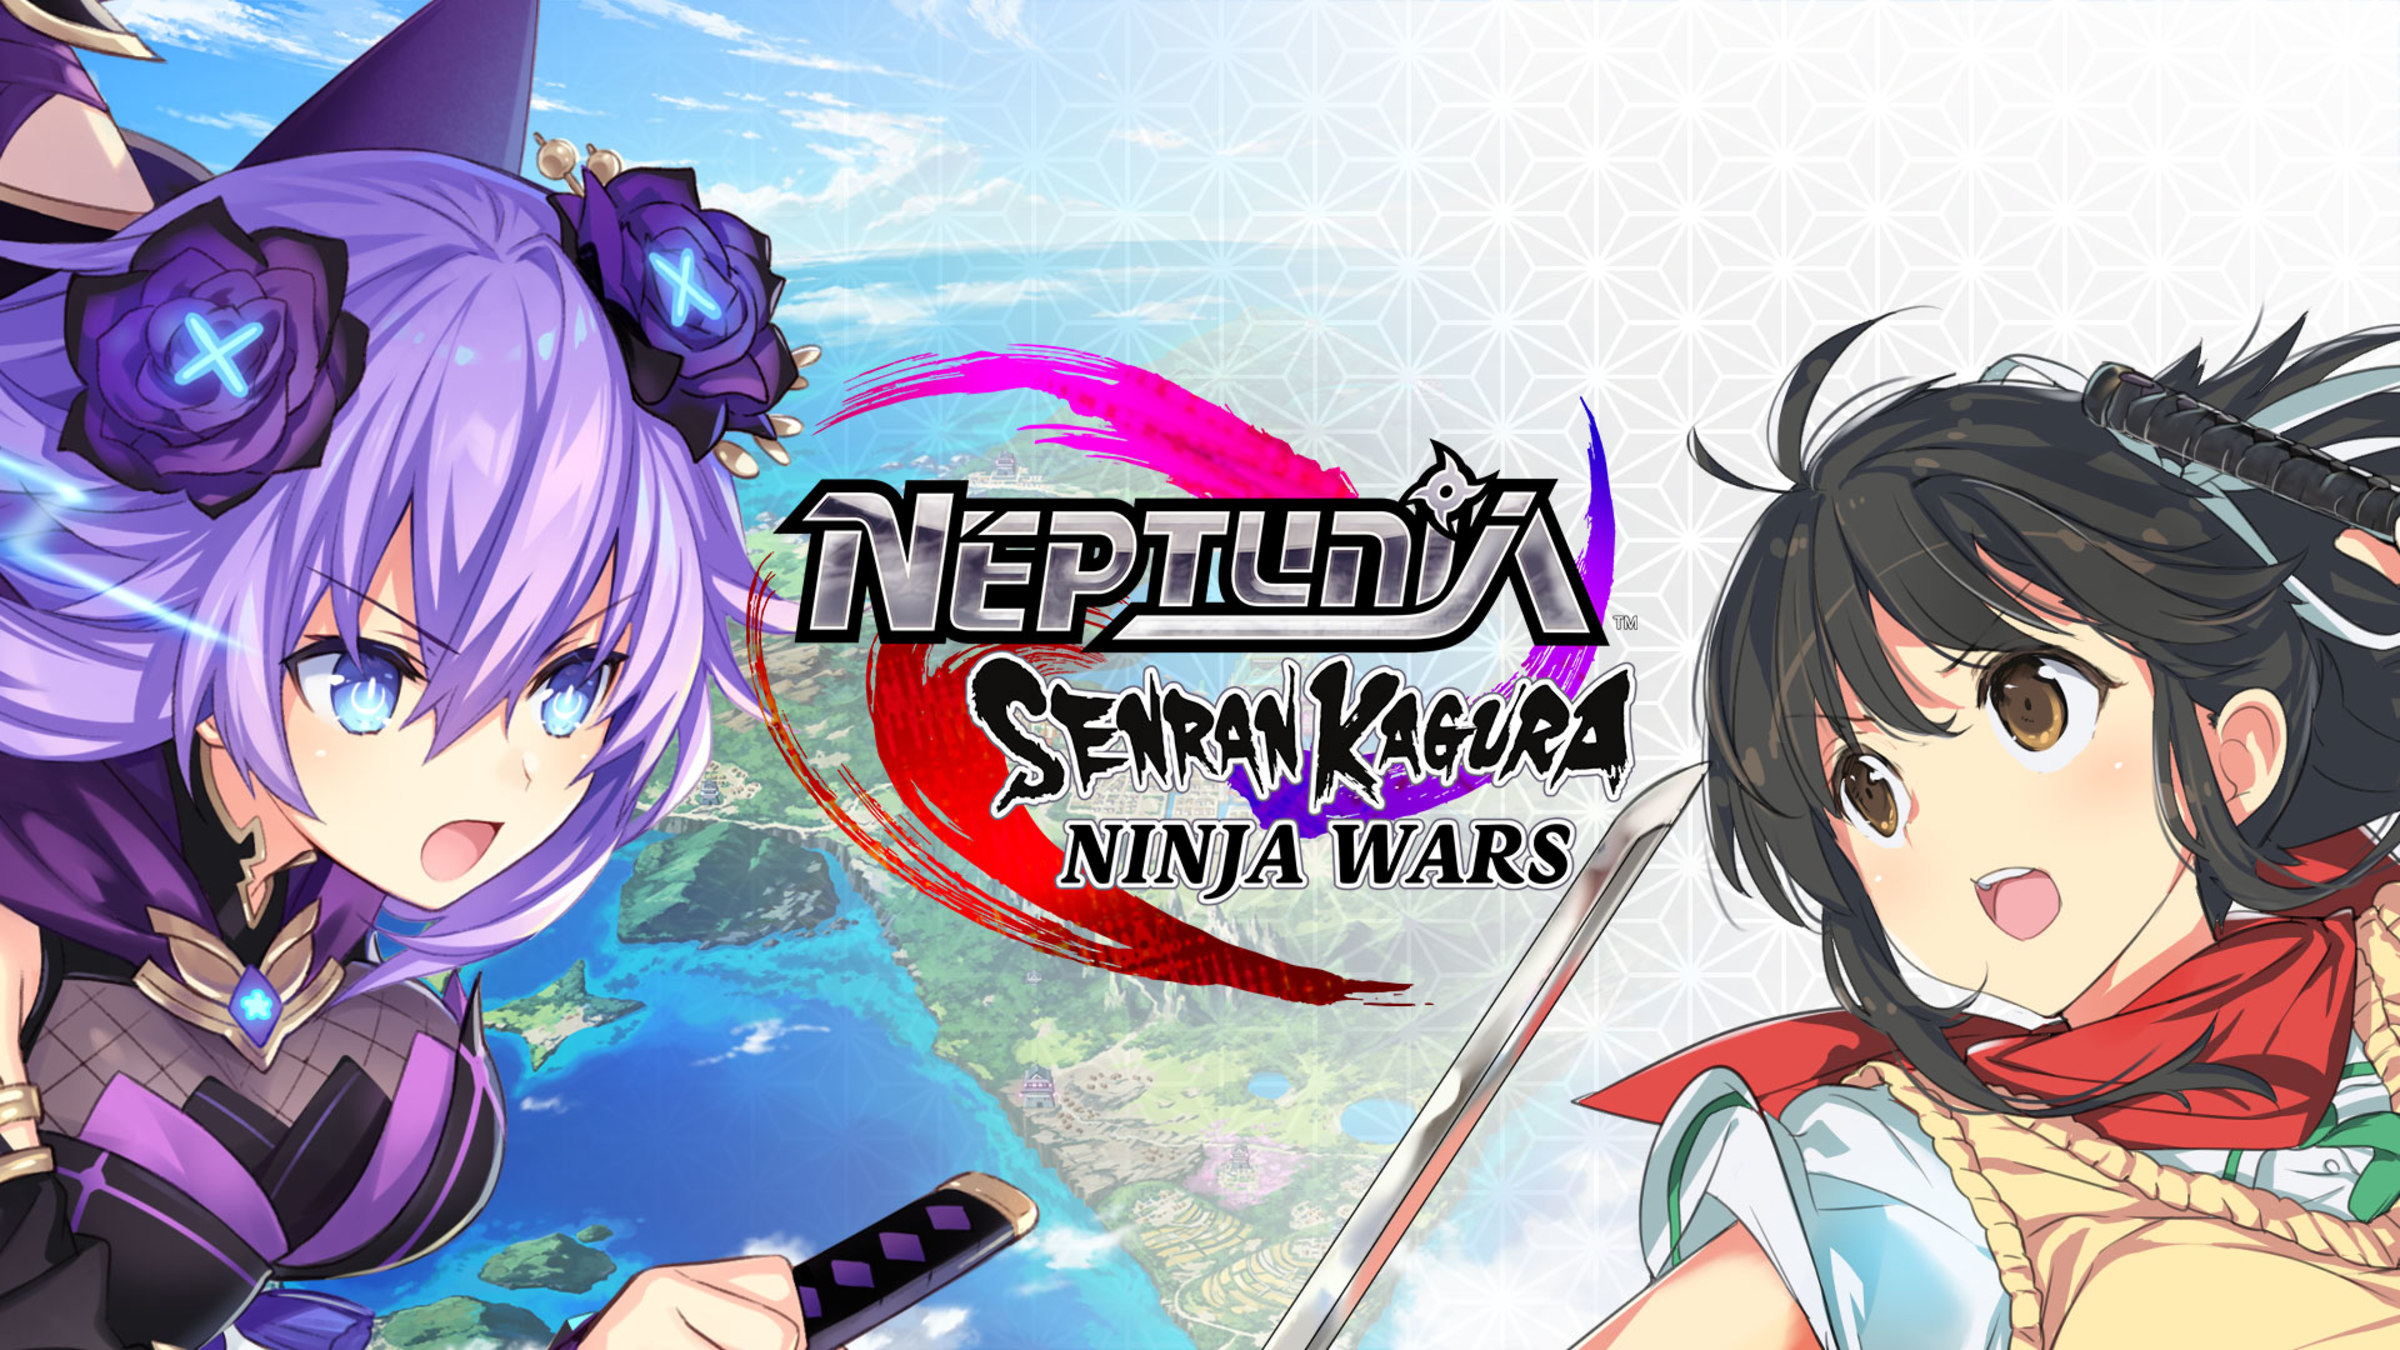 Neptunia X SENRAN KAGURA: Ninja Wars for Nintendo Switch - Nintendo  Official Site